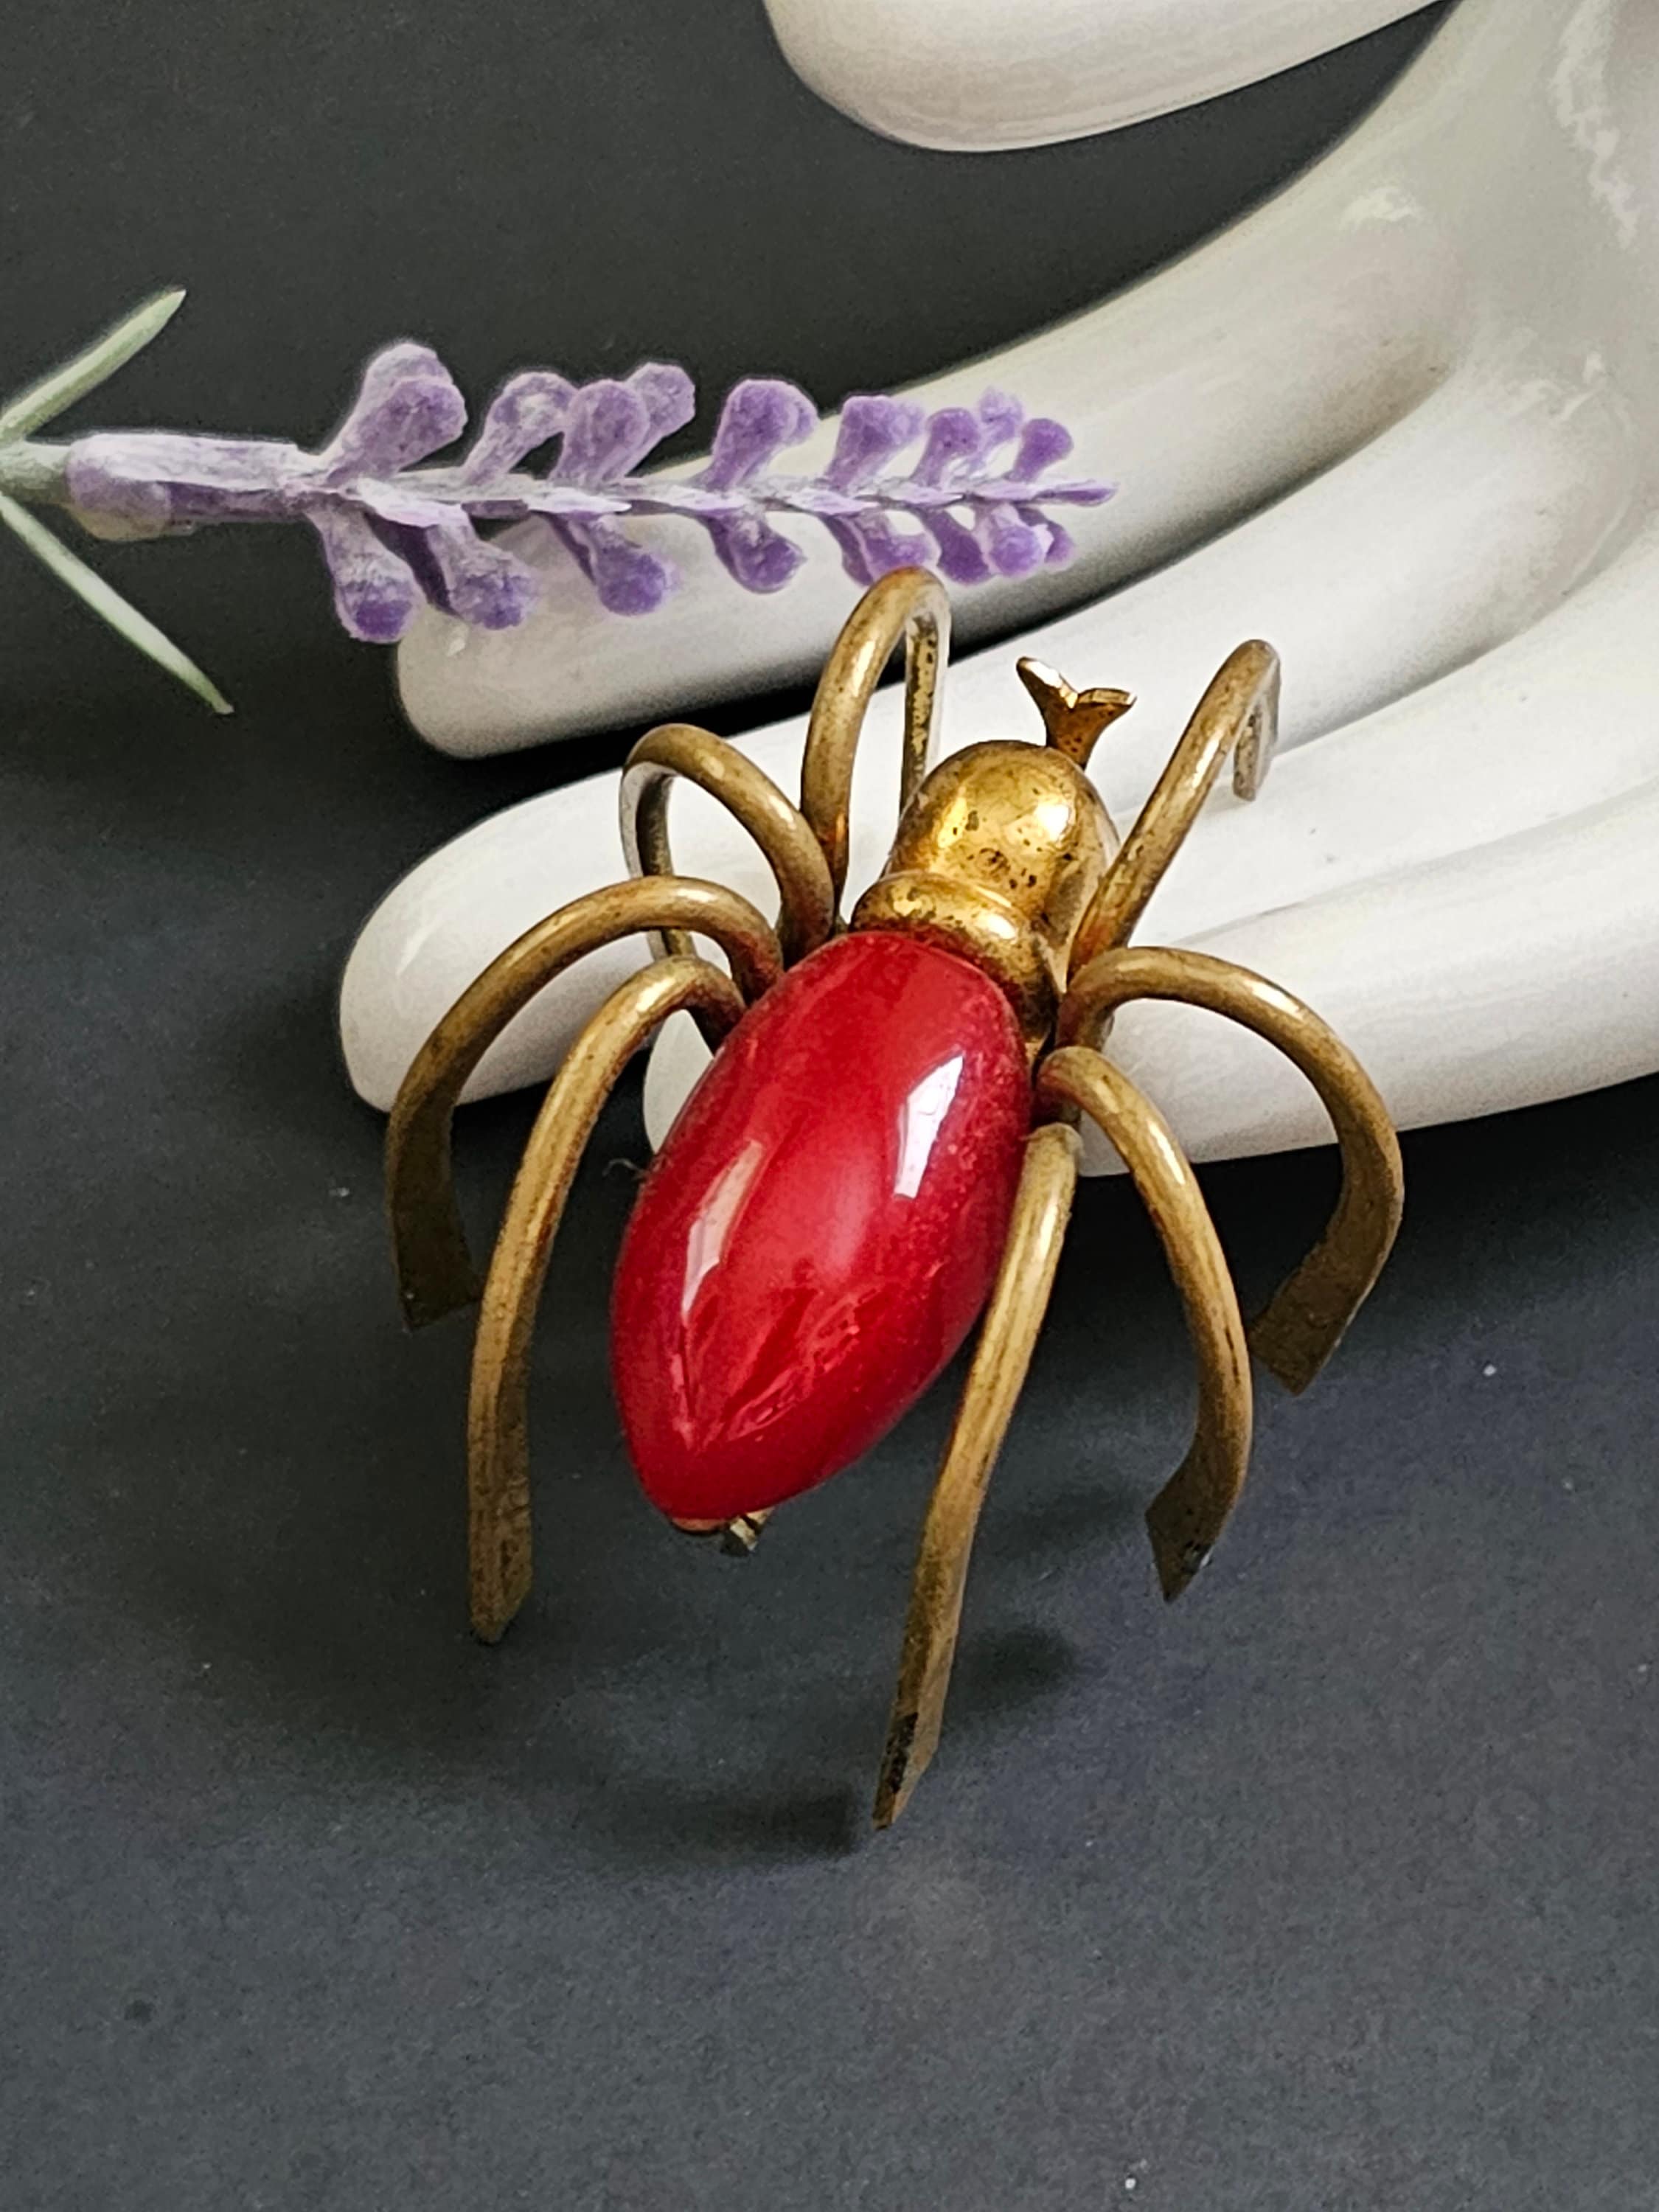 Vintage Bakelite Spider Brooch Art Deco 1930's - Spider Jewelry Red Bakelite